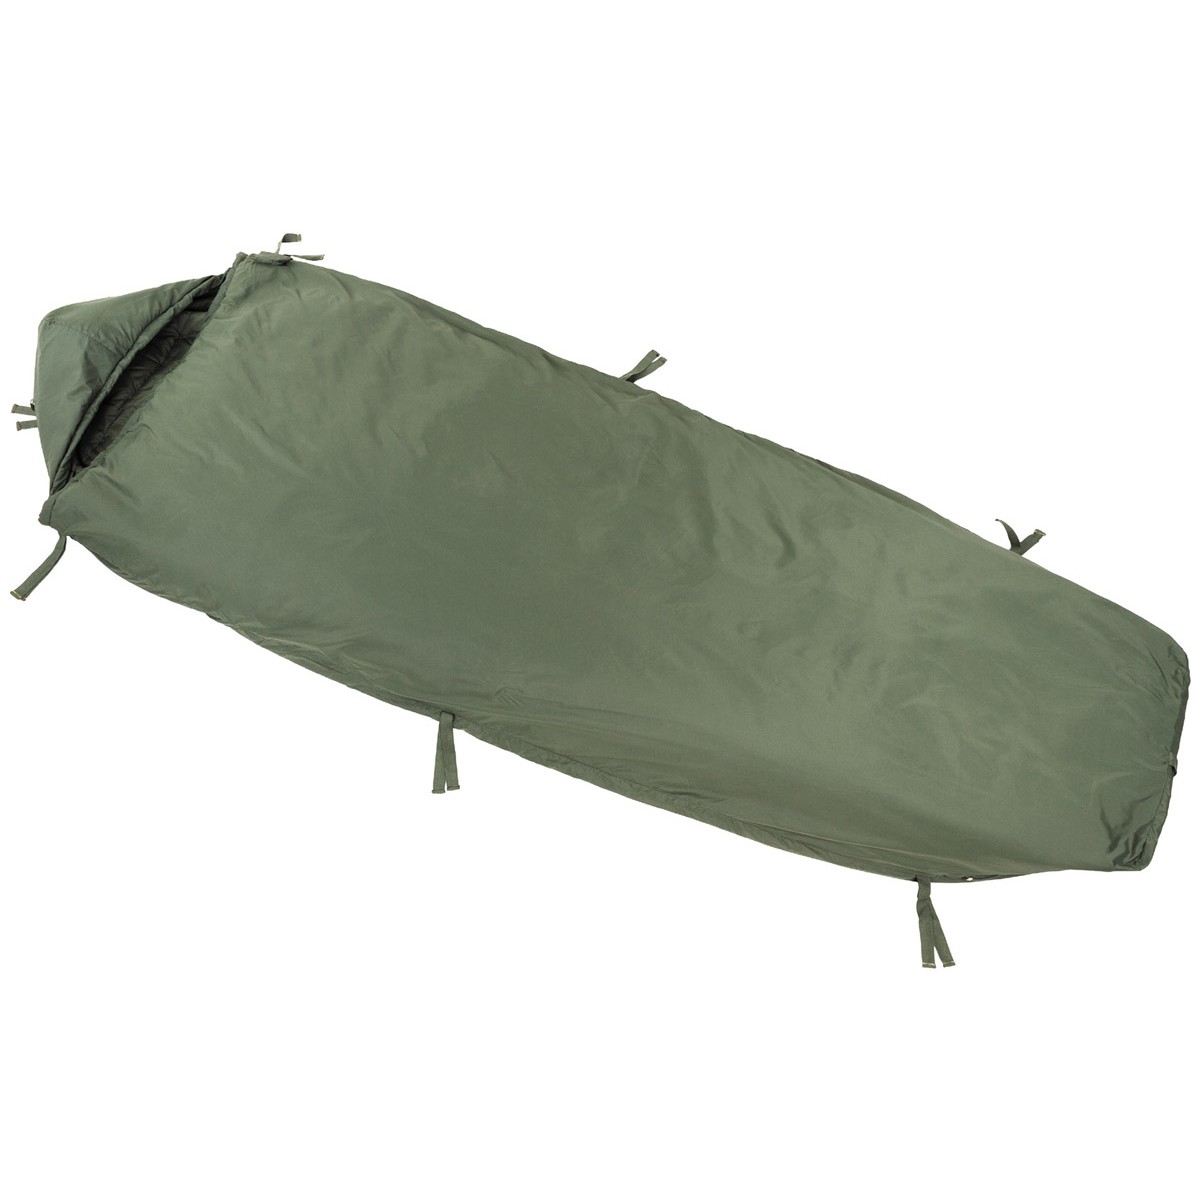 Latest Army Mod Lightweight Sleeping Bag Part Of A Modular Sleep System Strikeforce Suppliesstrikeforce Supplies